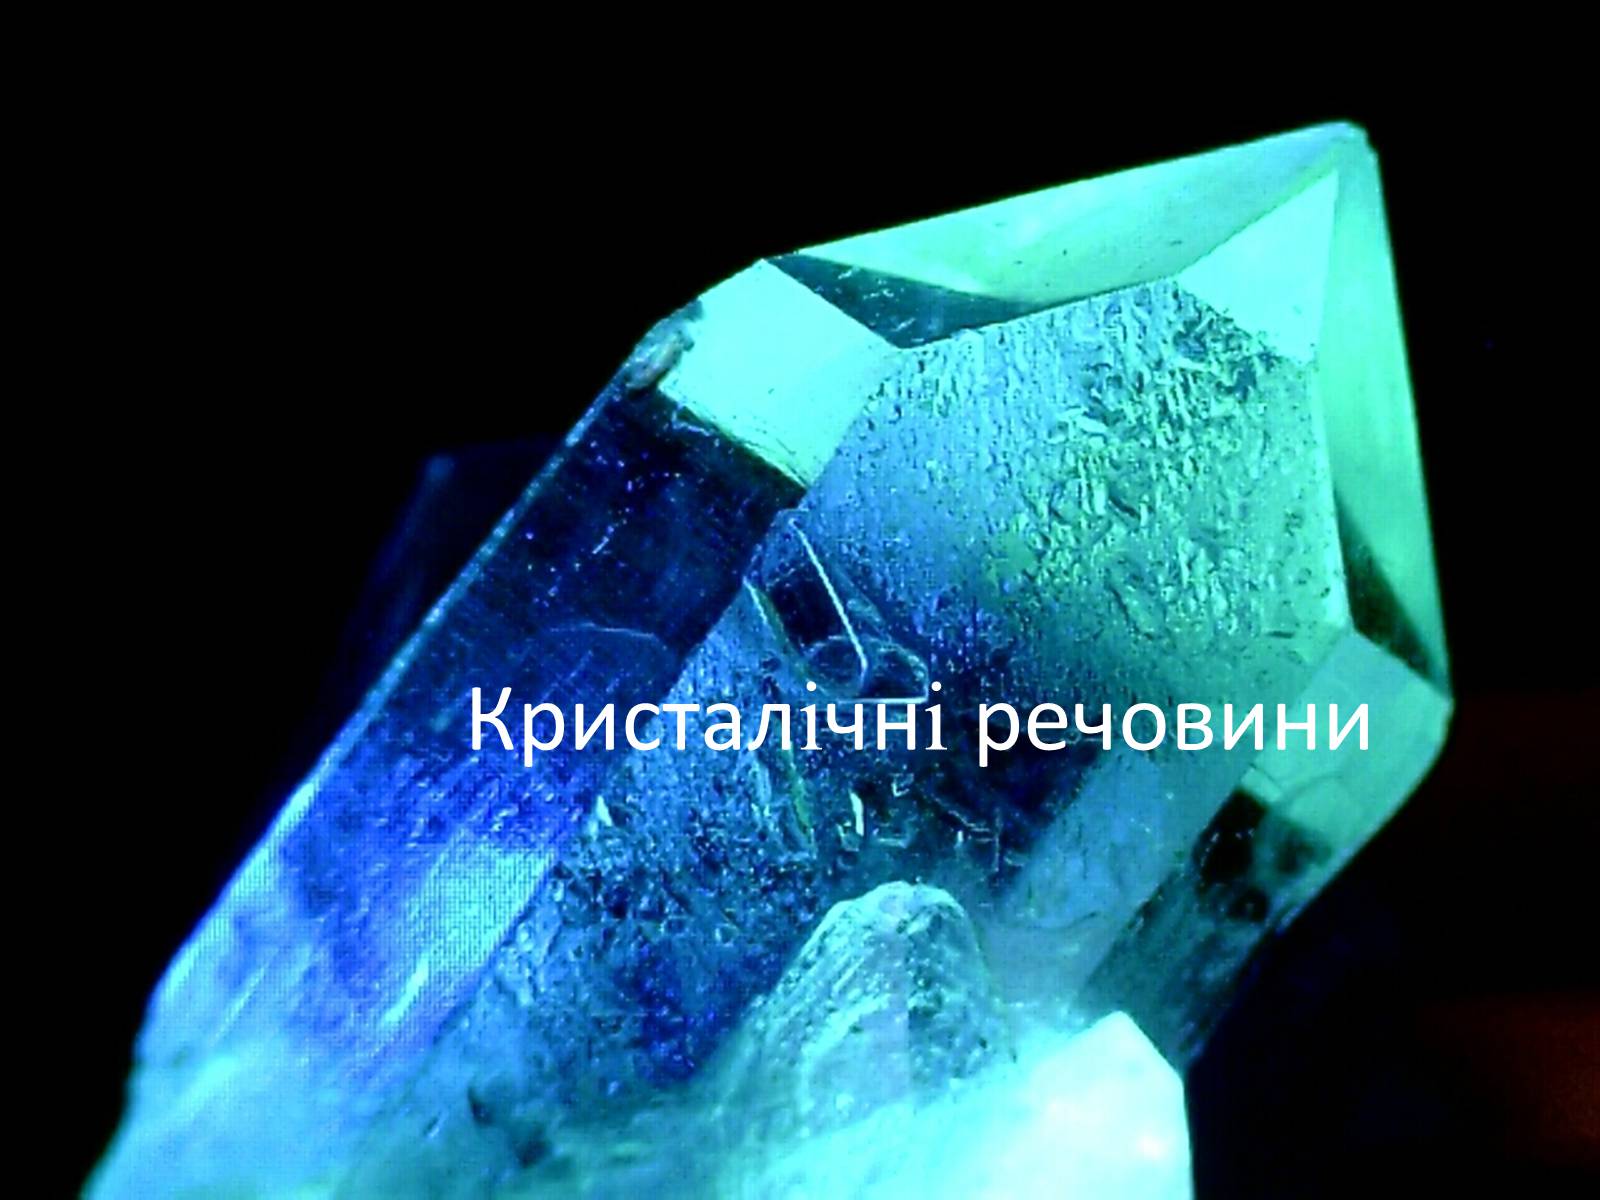 Blue crystal 2